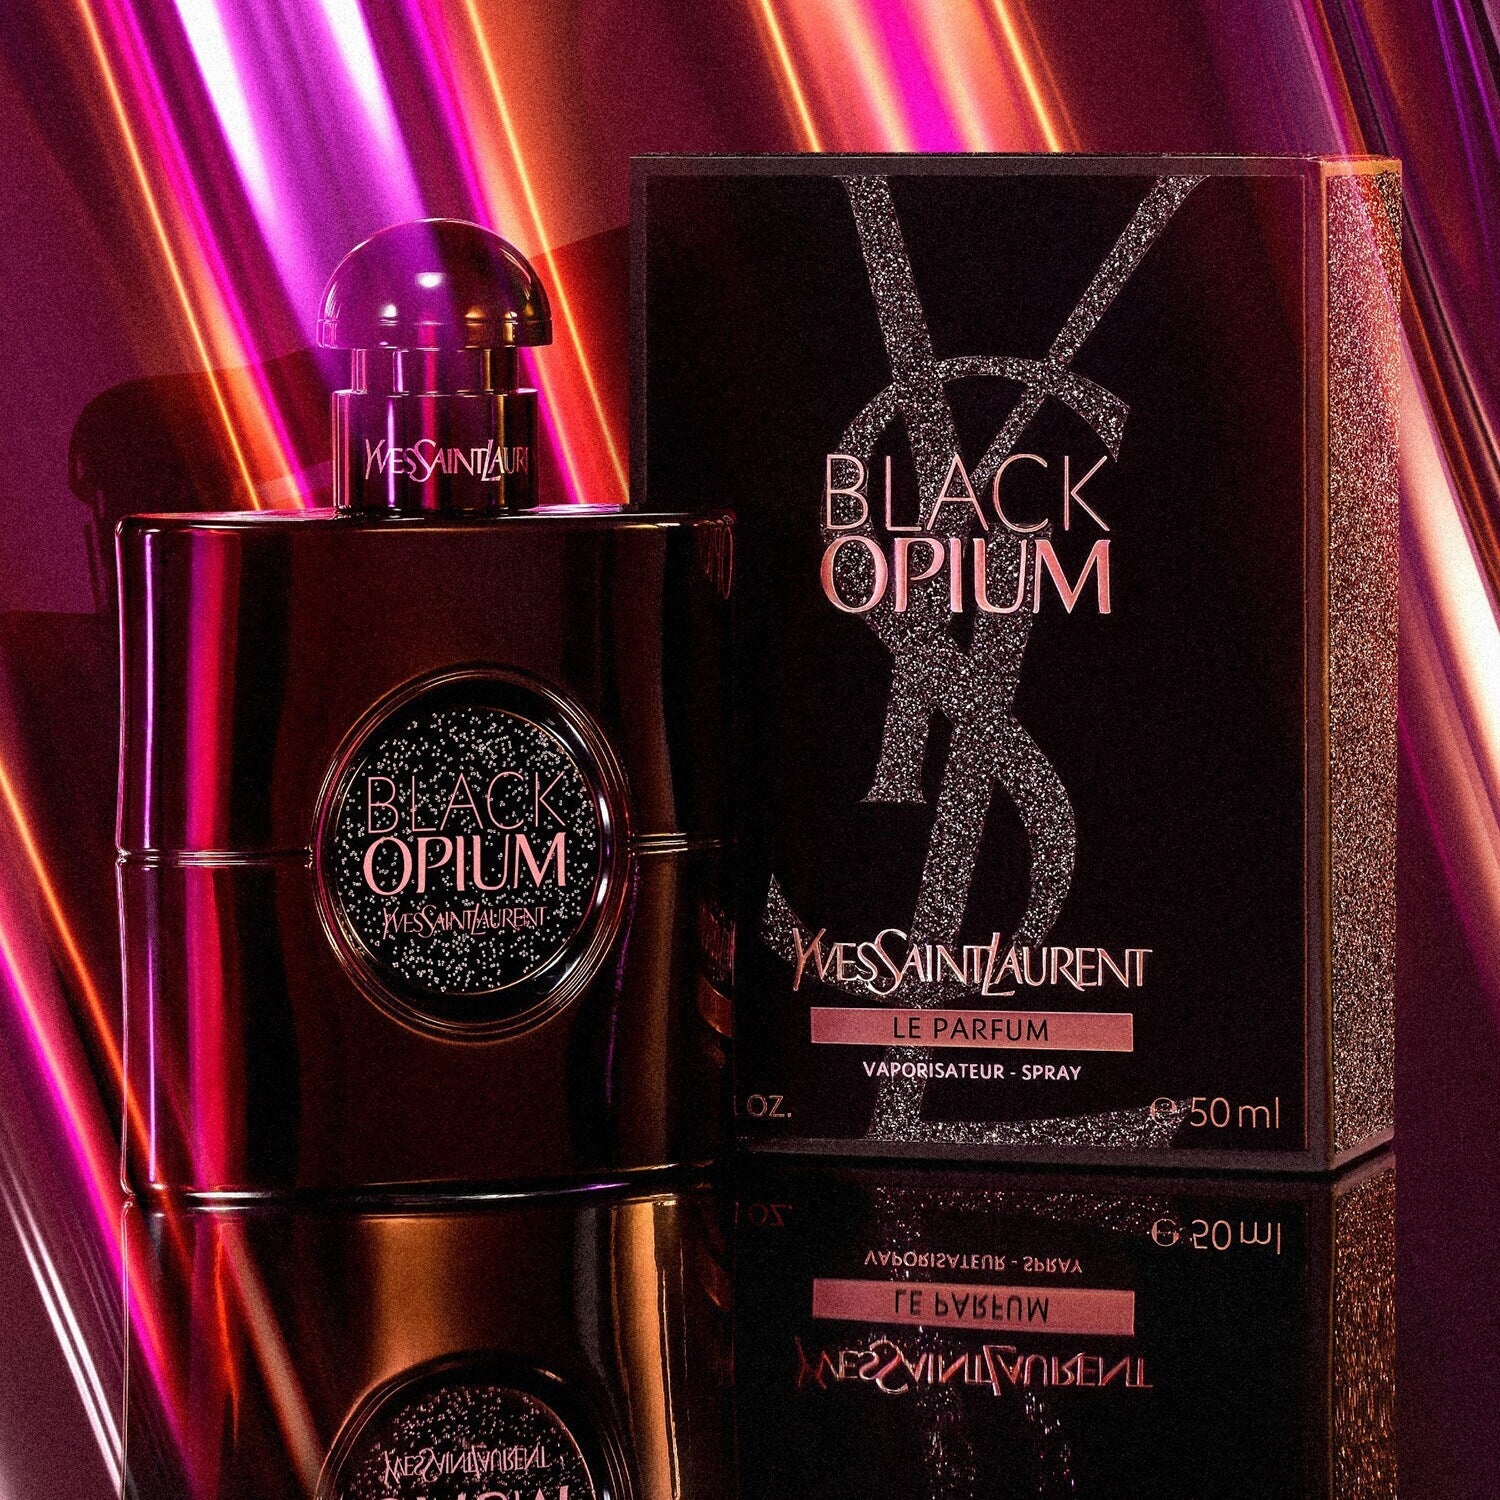 Yves Saint Laurent Black Opium Le Parfum | My Perfume Shop Australia